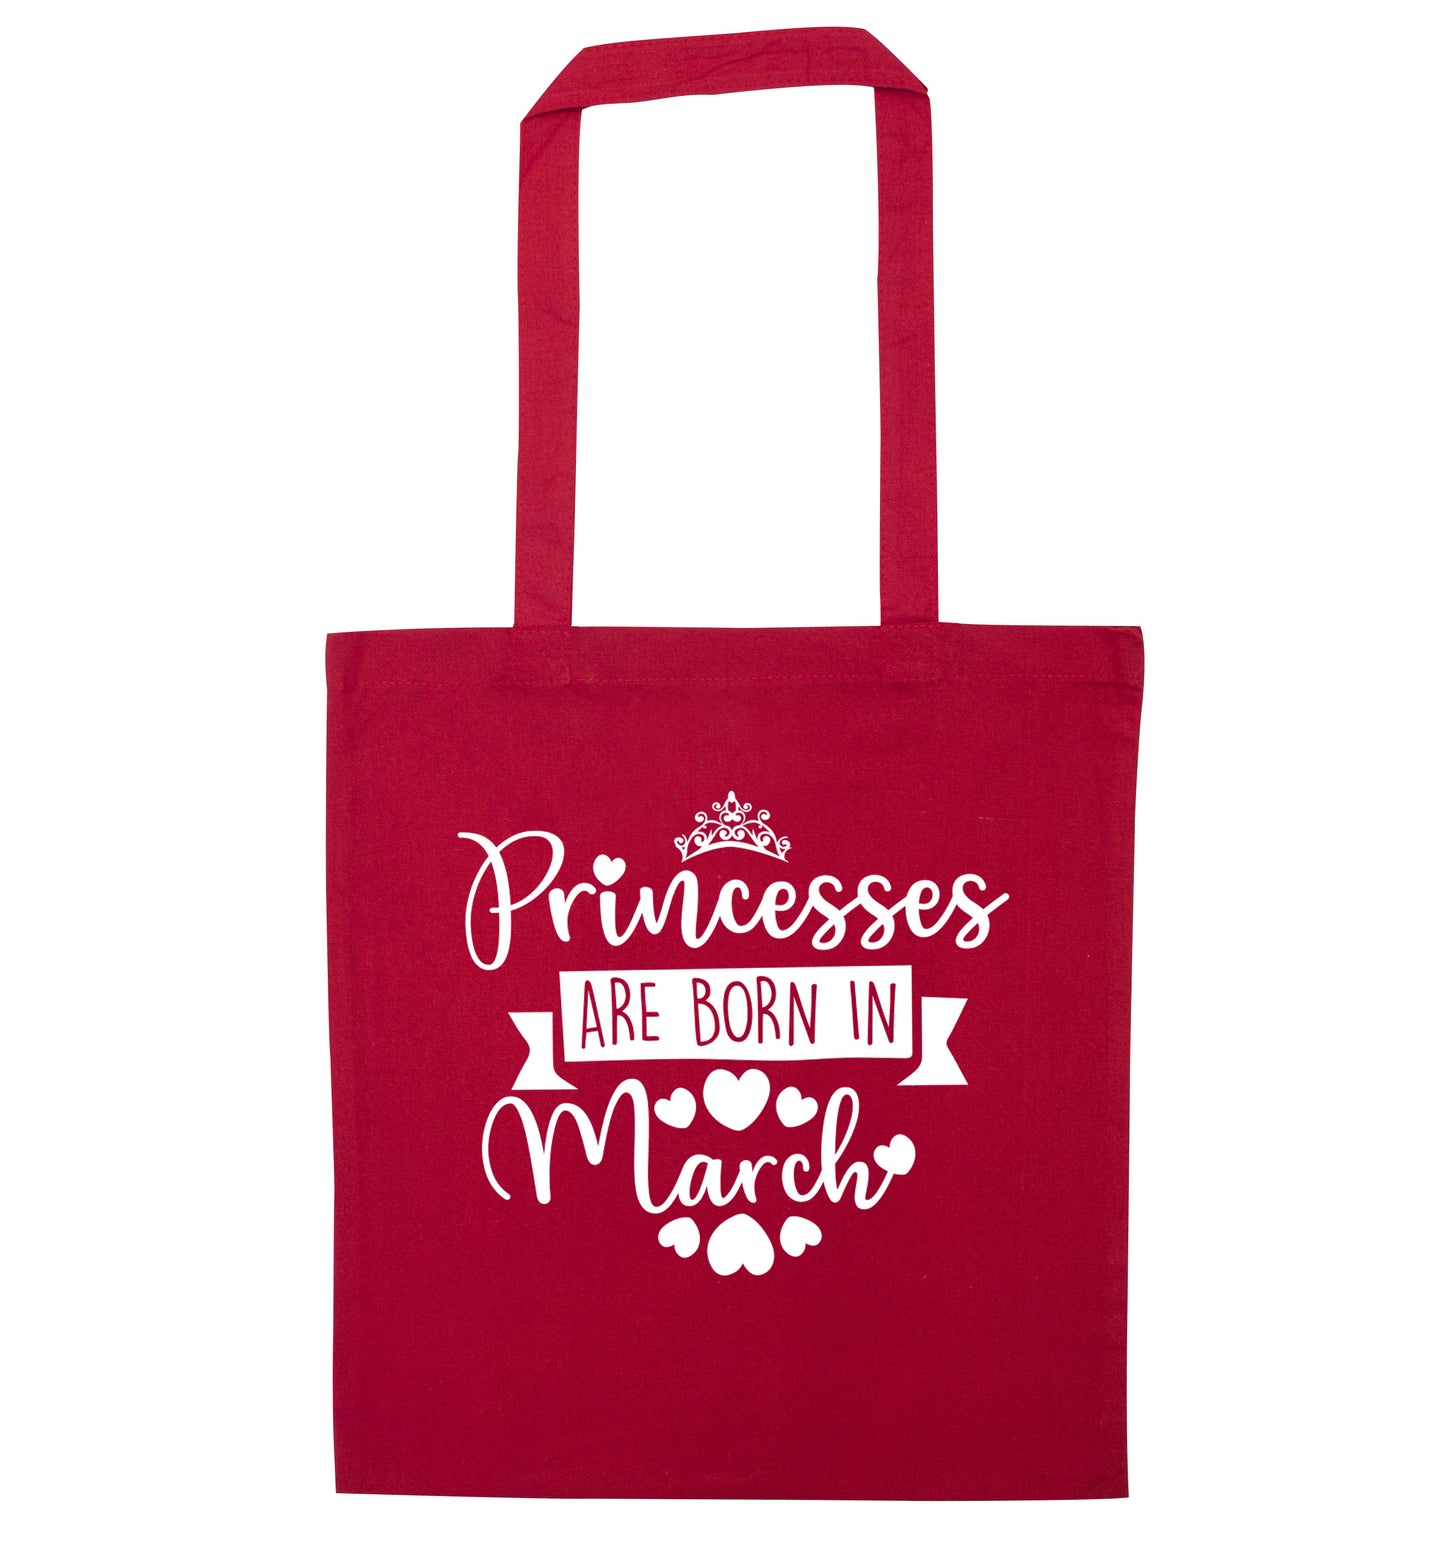 Princesses are born in March red tote bag